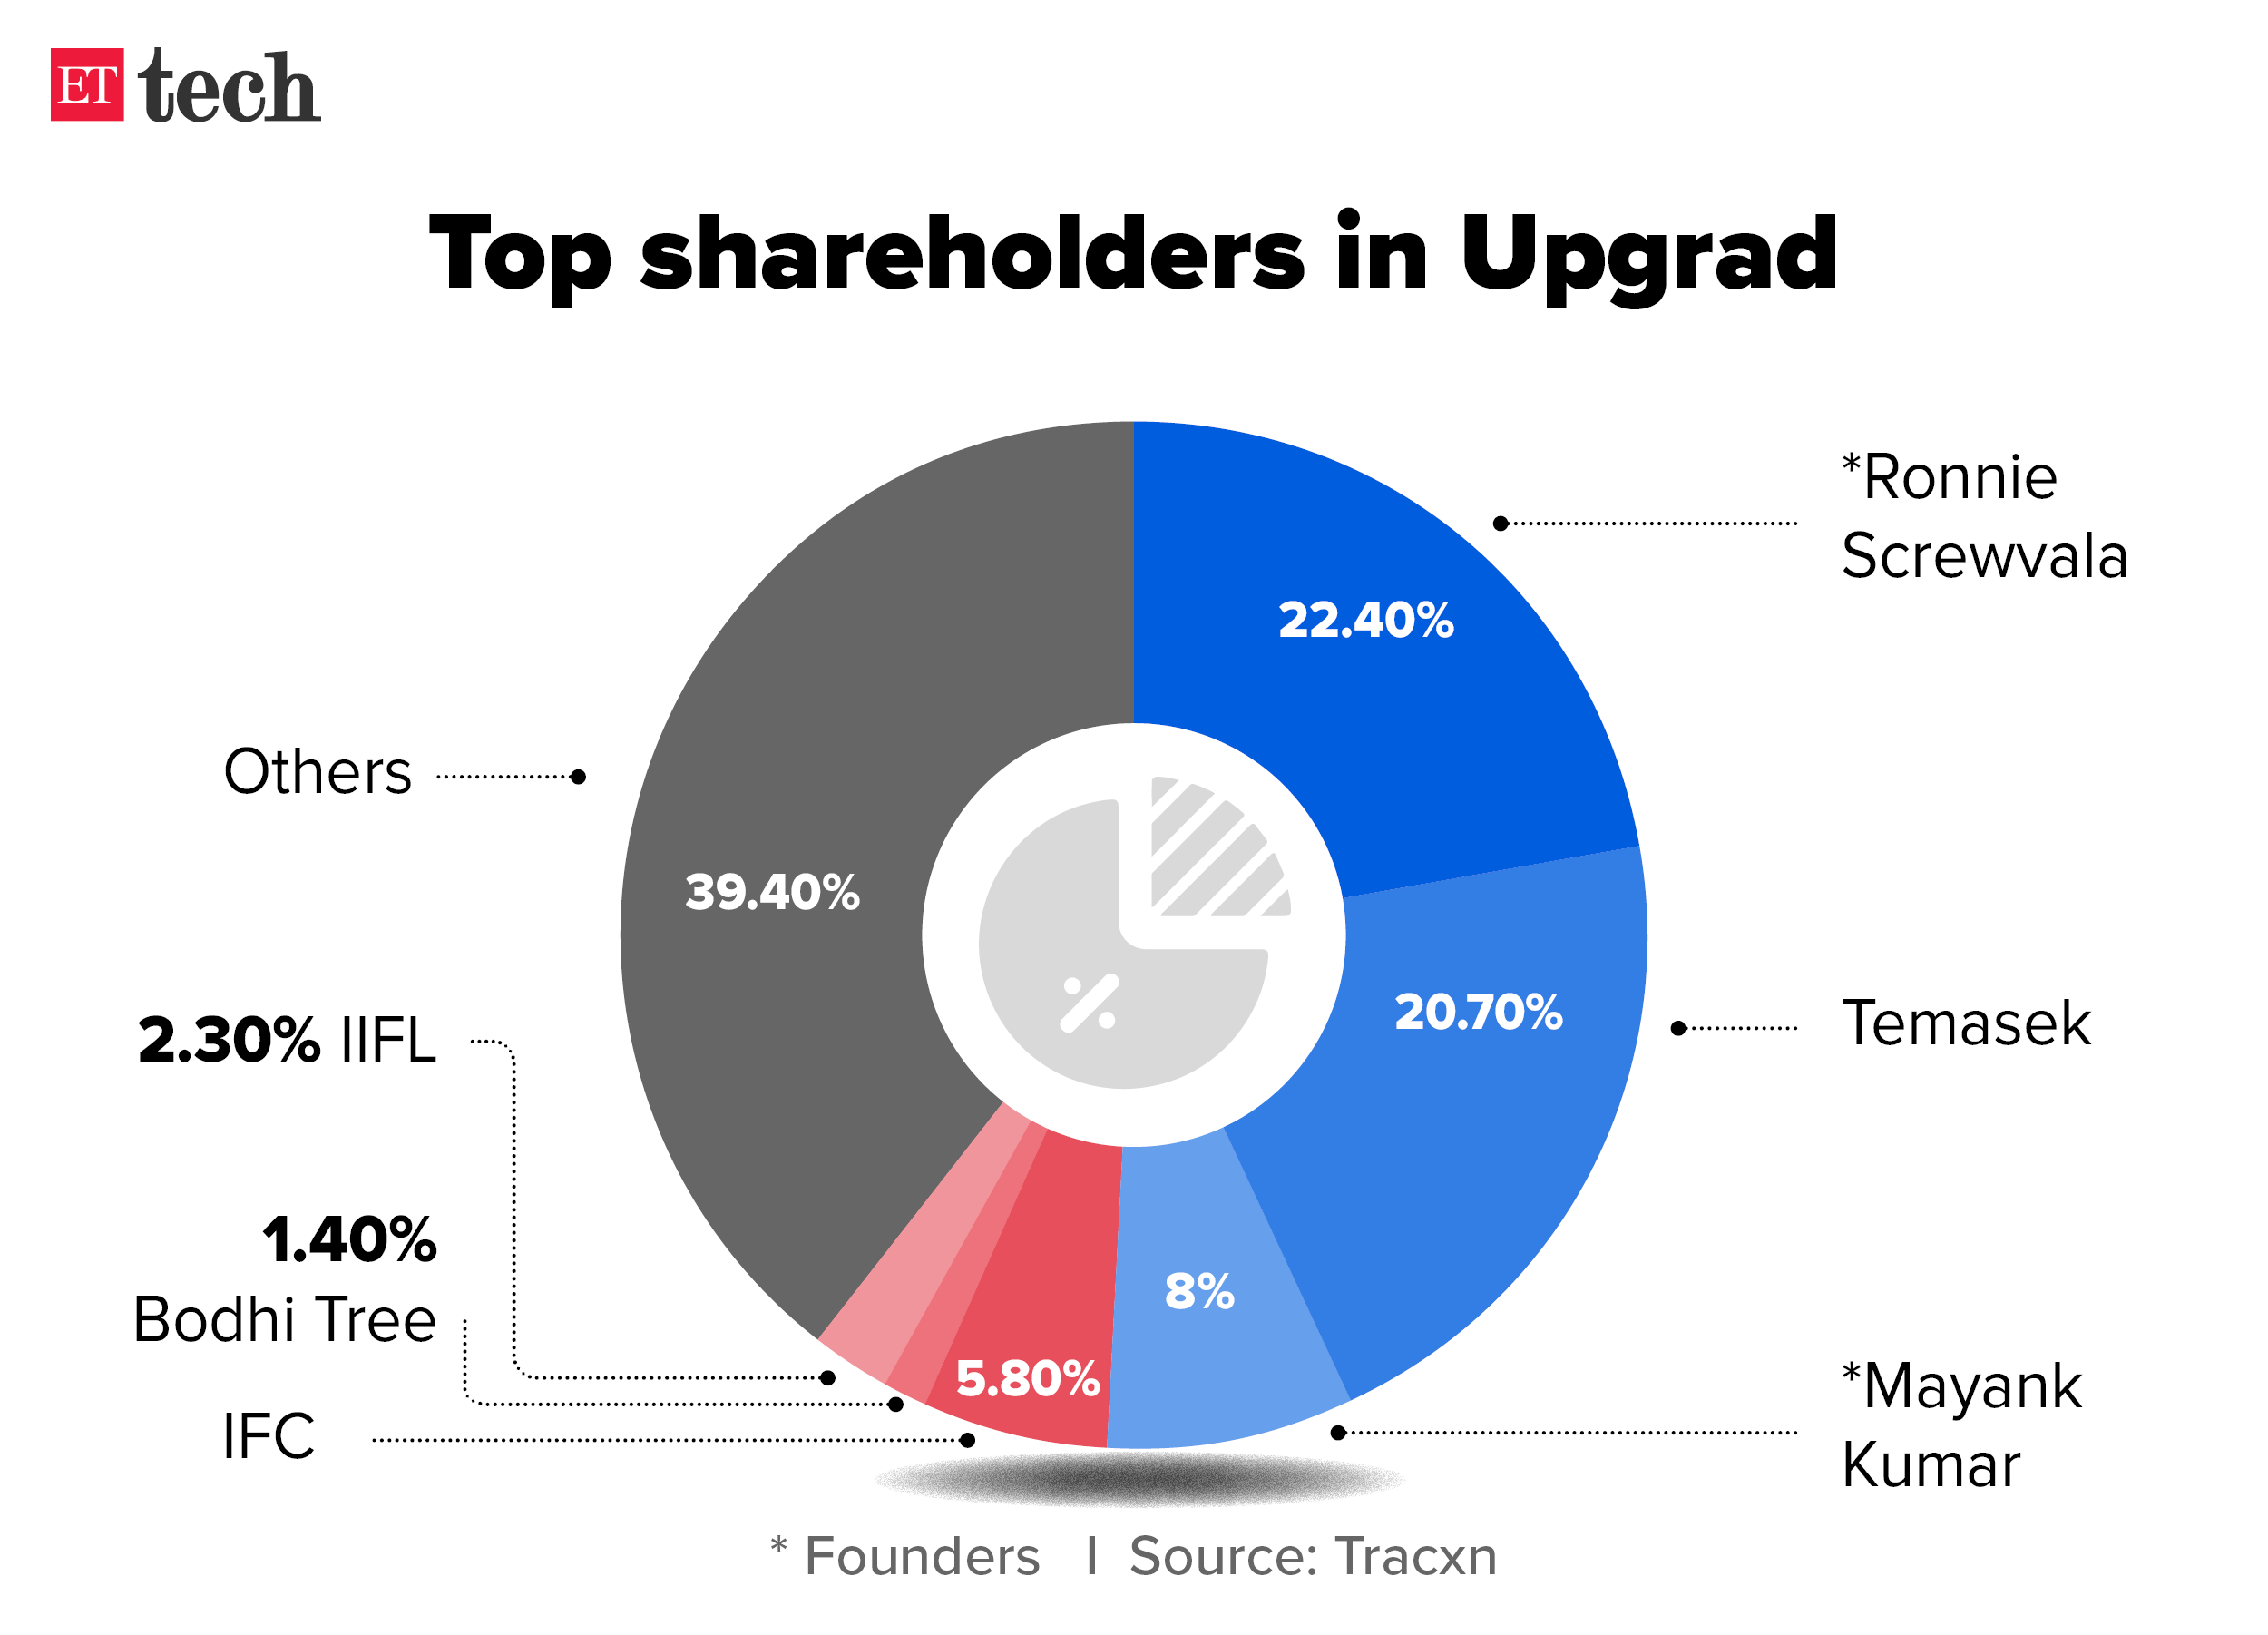 Top shareholders in Upgrad